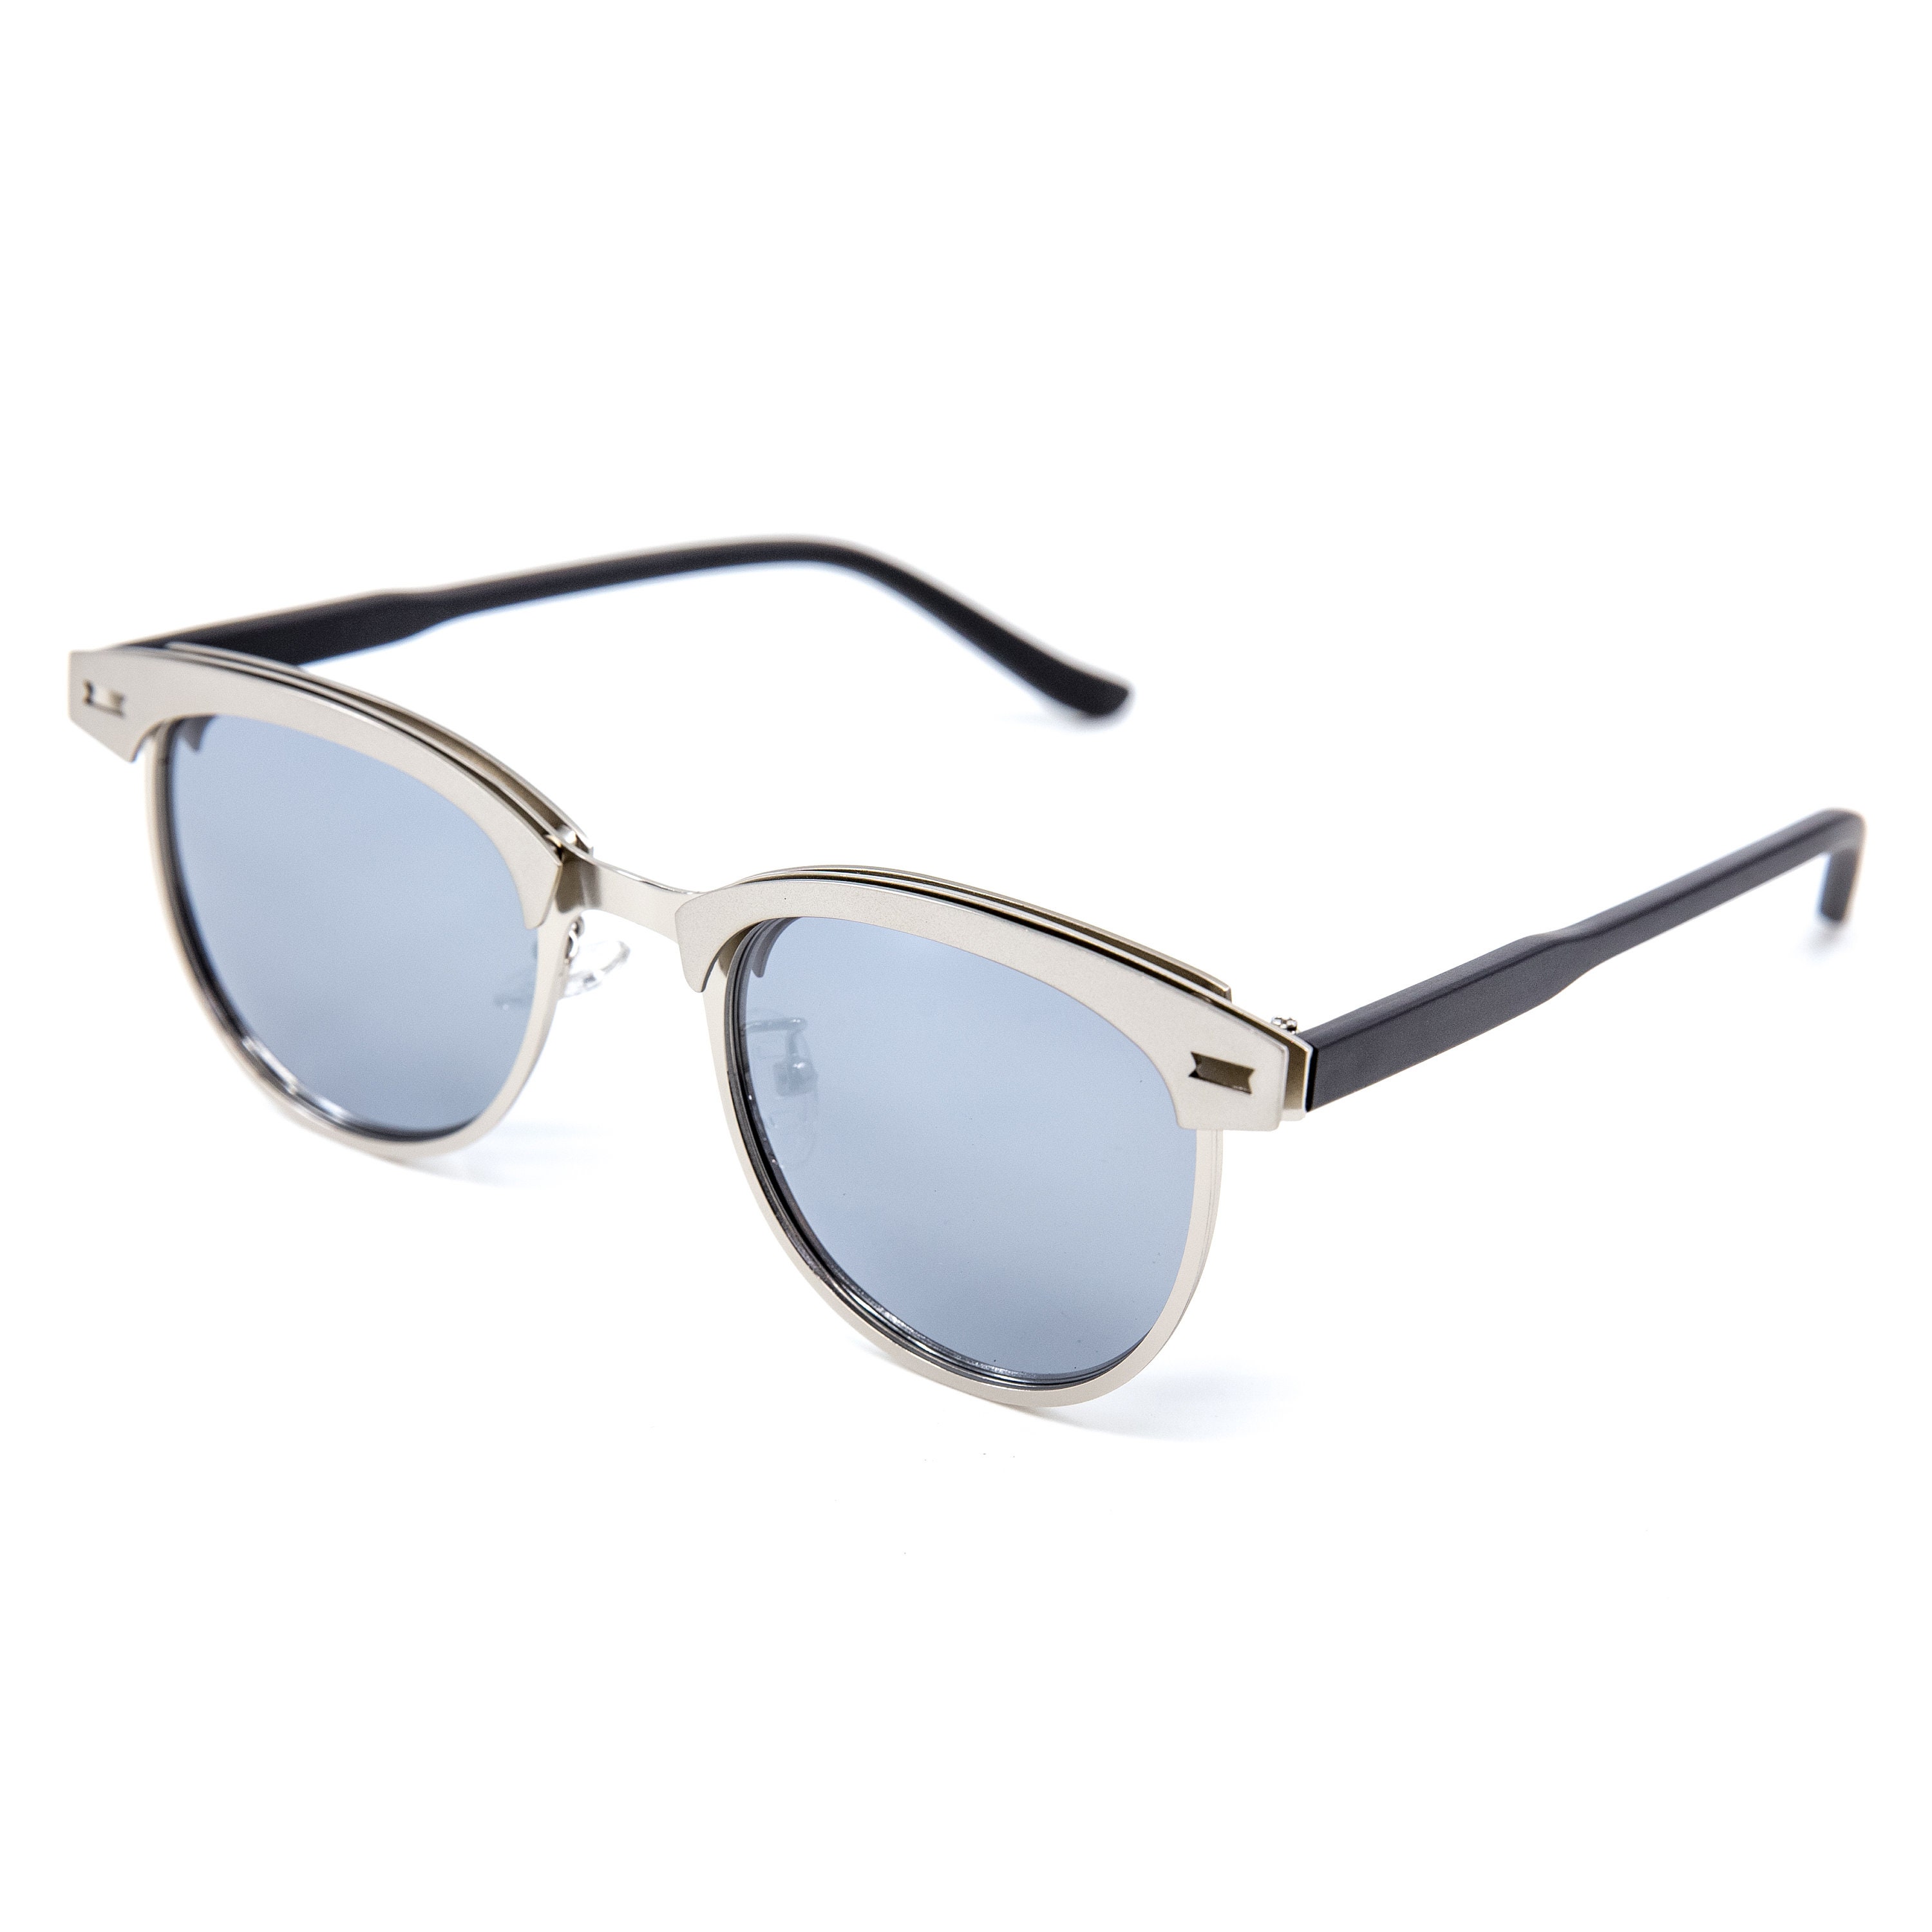 Classic Wayfarer Polarized Sunglasses Trending 2020 Style | Etsy